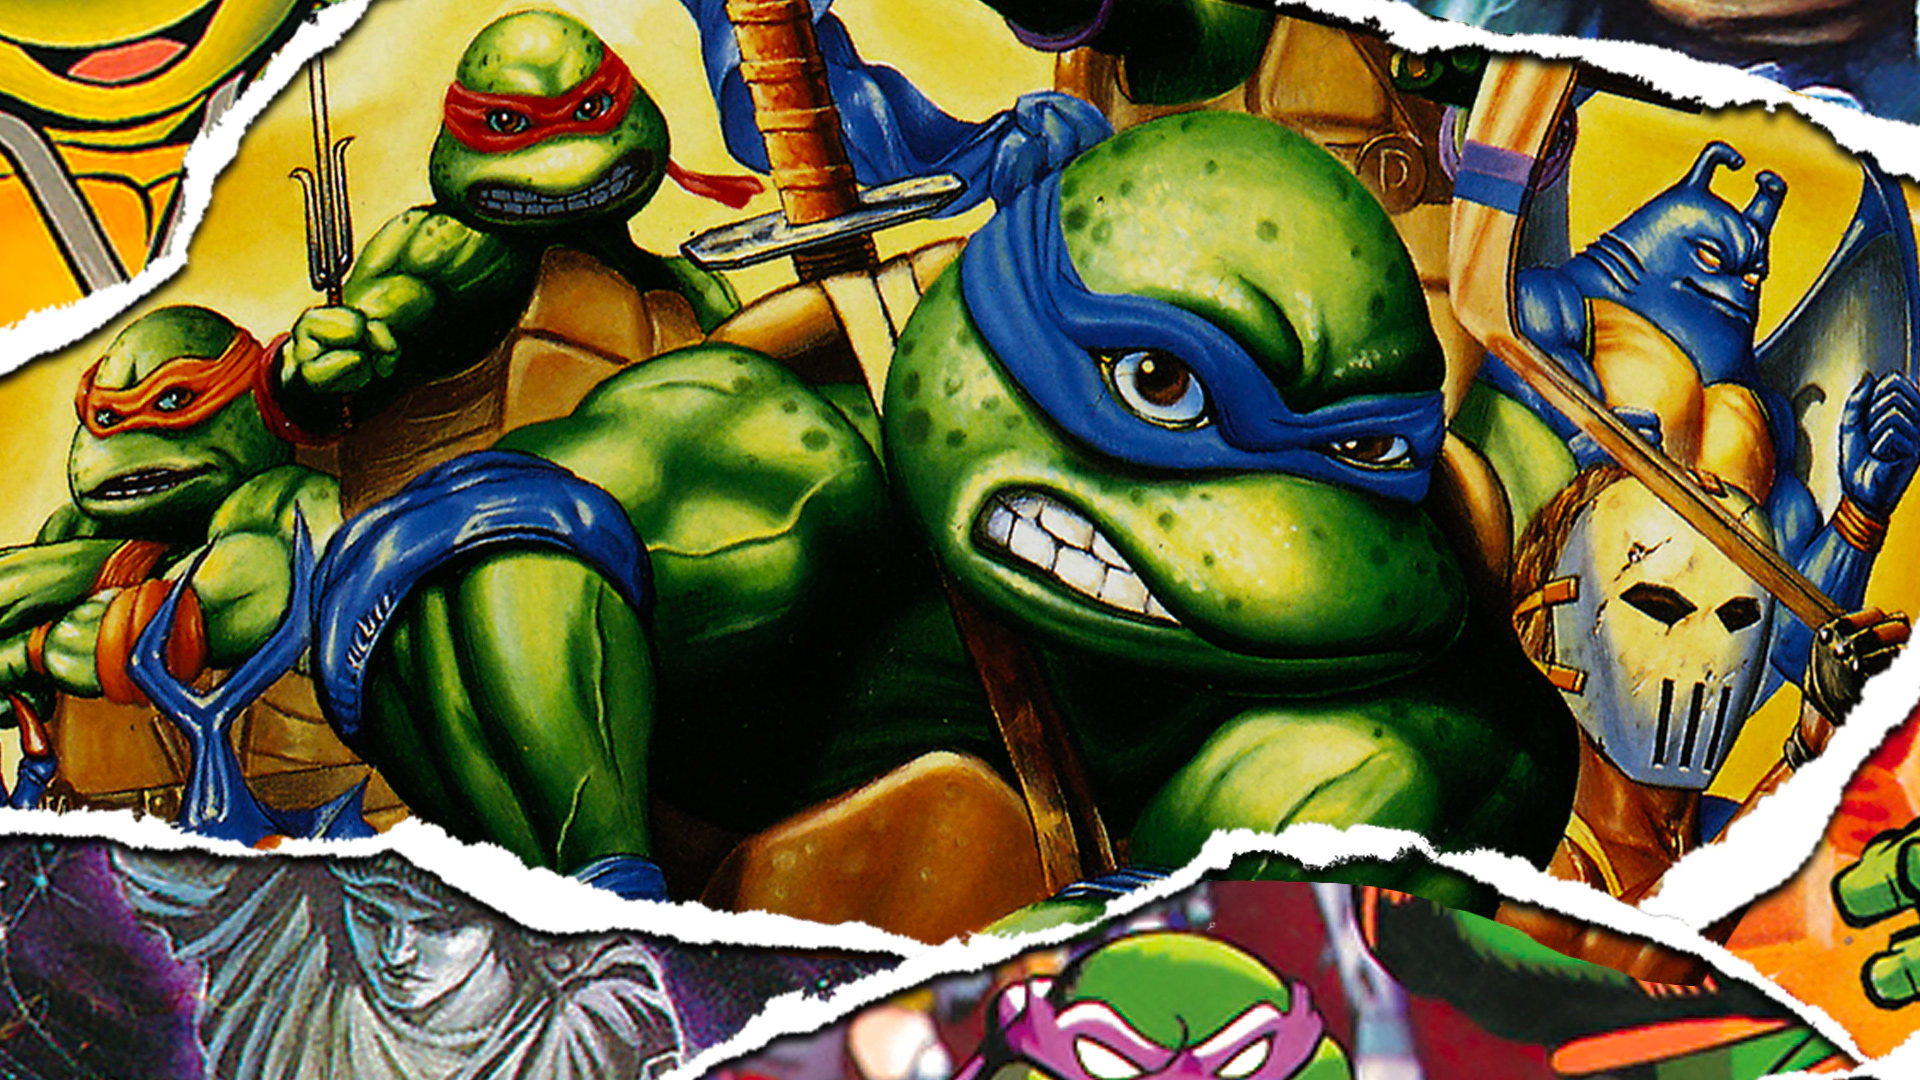 Turtles cowabunga collection. TMNT Cowabunga collection. Teenage Mutant Ninja Turtles: the Cowabunga. Mutant Ninja Turtles: the Cowabunga collection. TMNT: the Cowabunga collection на Nintendo Switch.